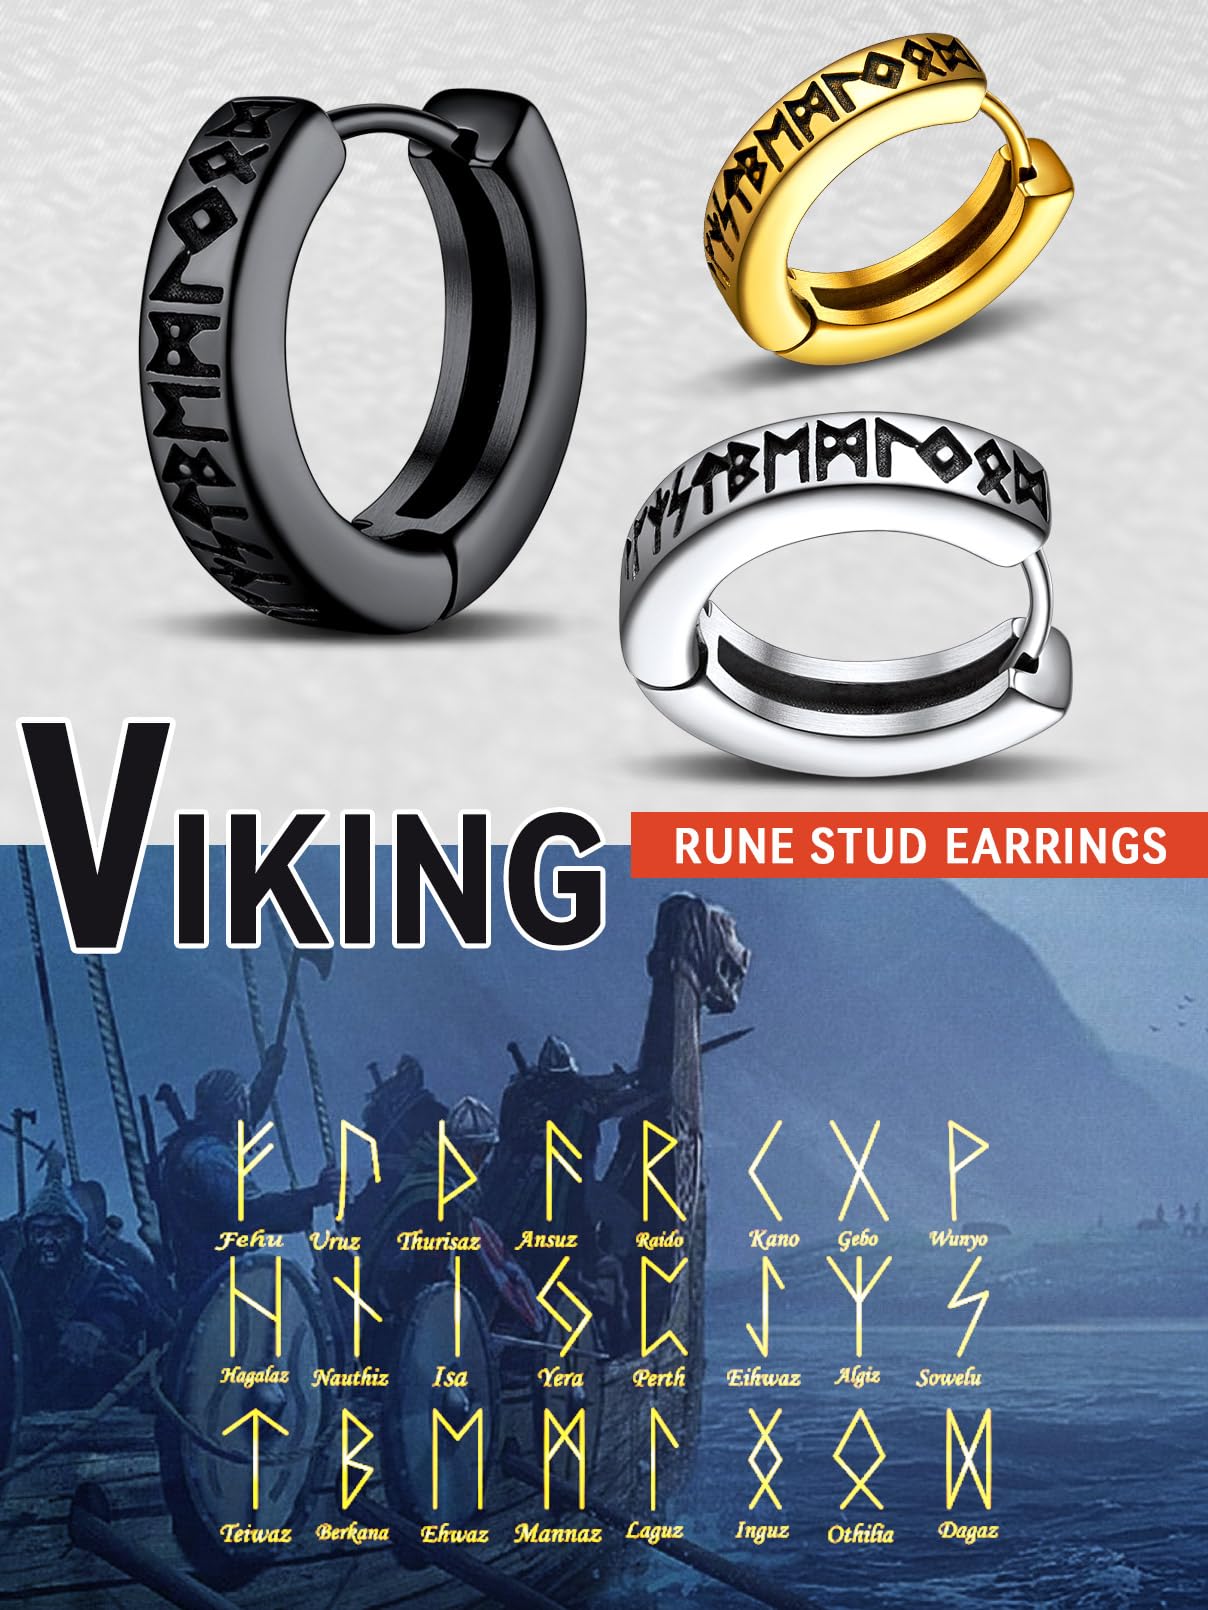 FaithHeart Norse Viking Runes Hoop Earrings for Men Women 12mm Huggie Hoops with Delicate Gift Packaging